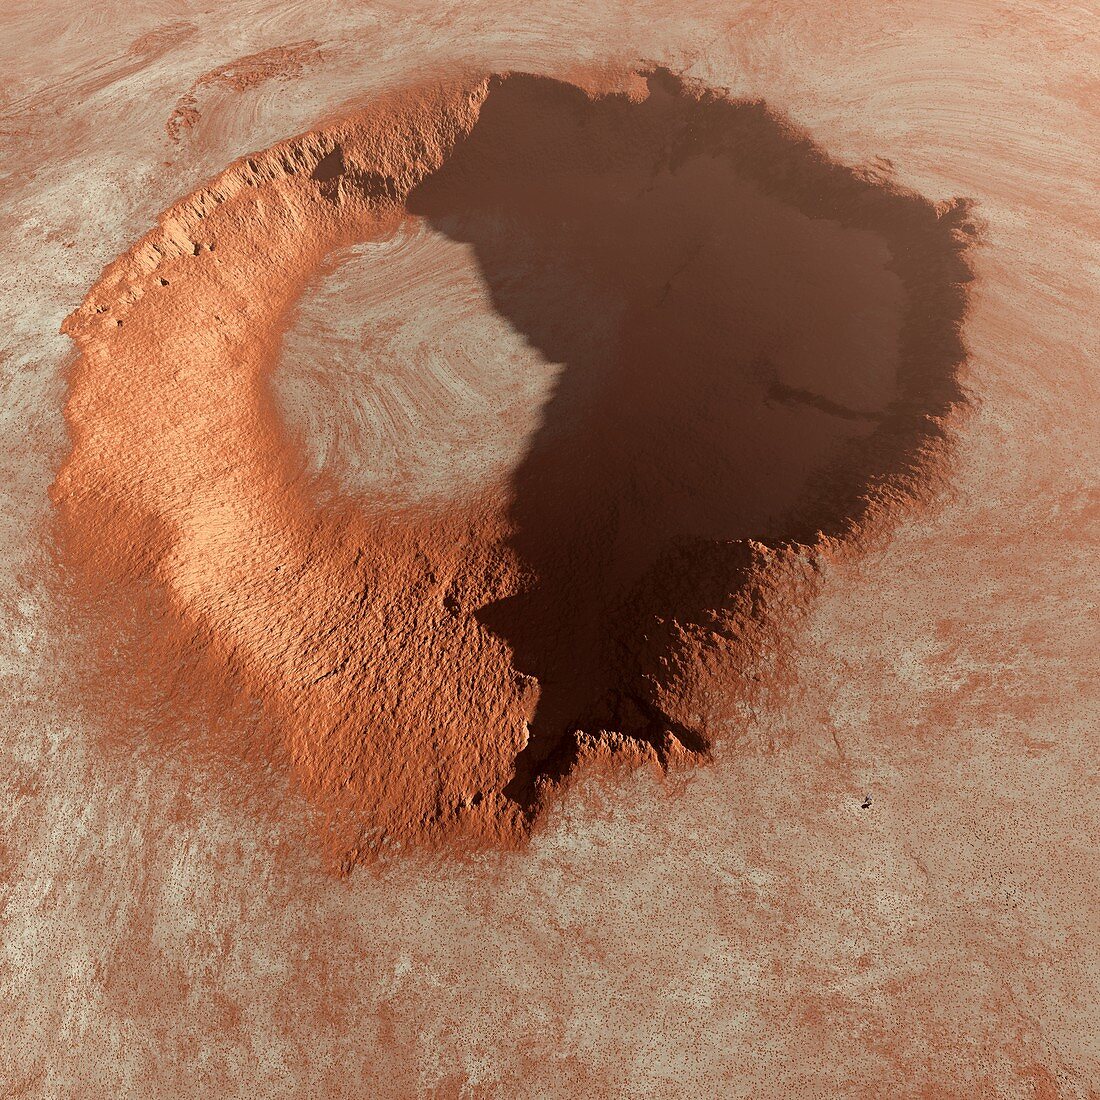 Martian surface, illustration